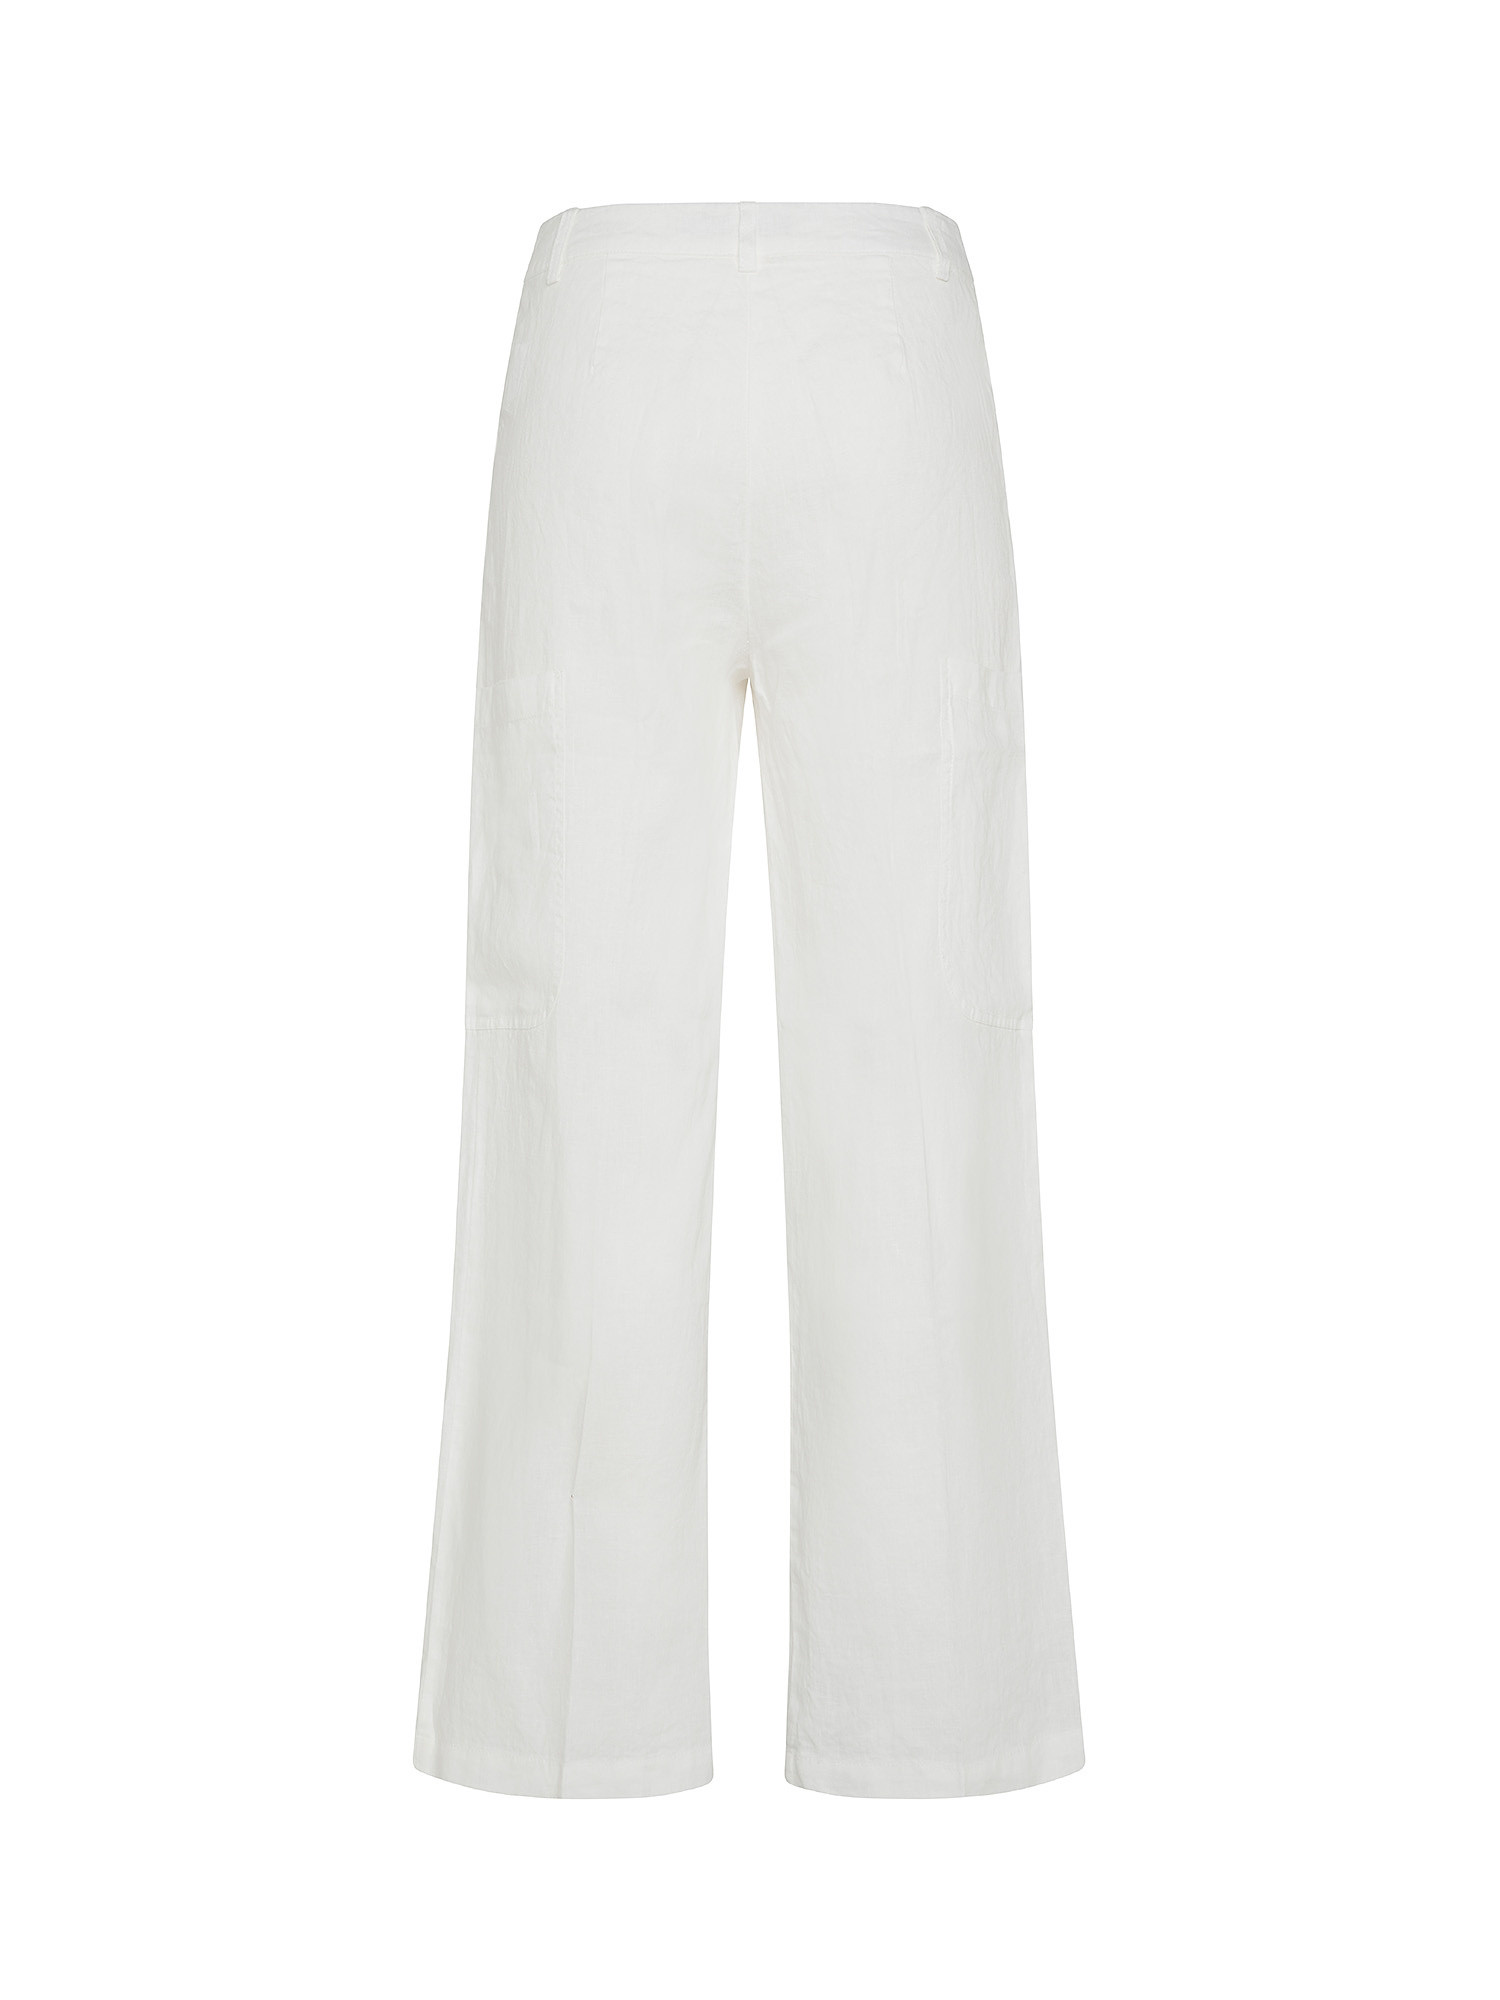 Koan - Linen cargo pants, White, large image number 1